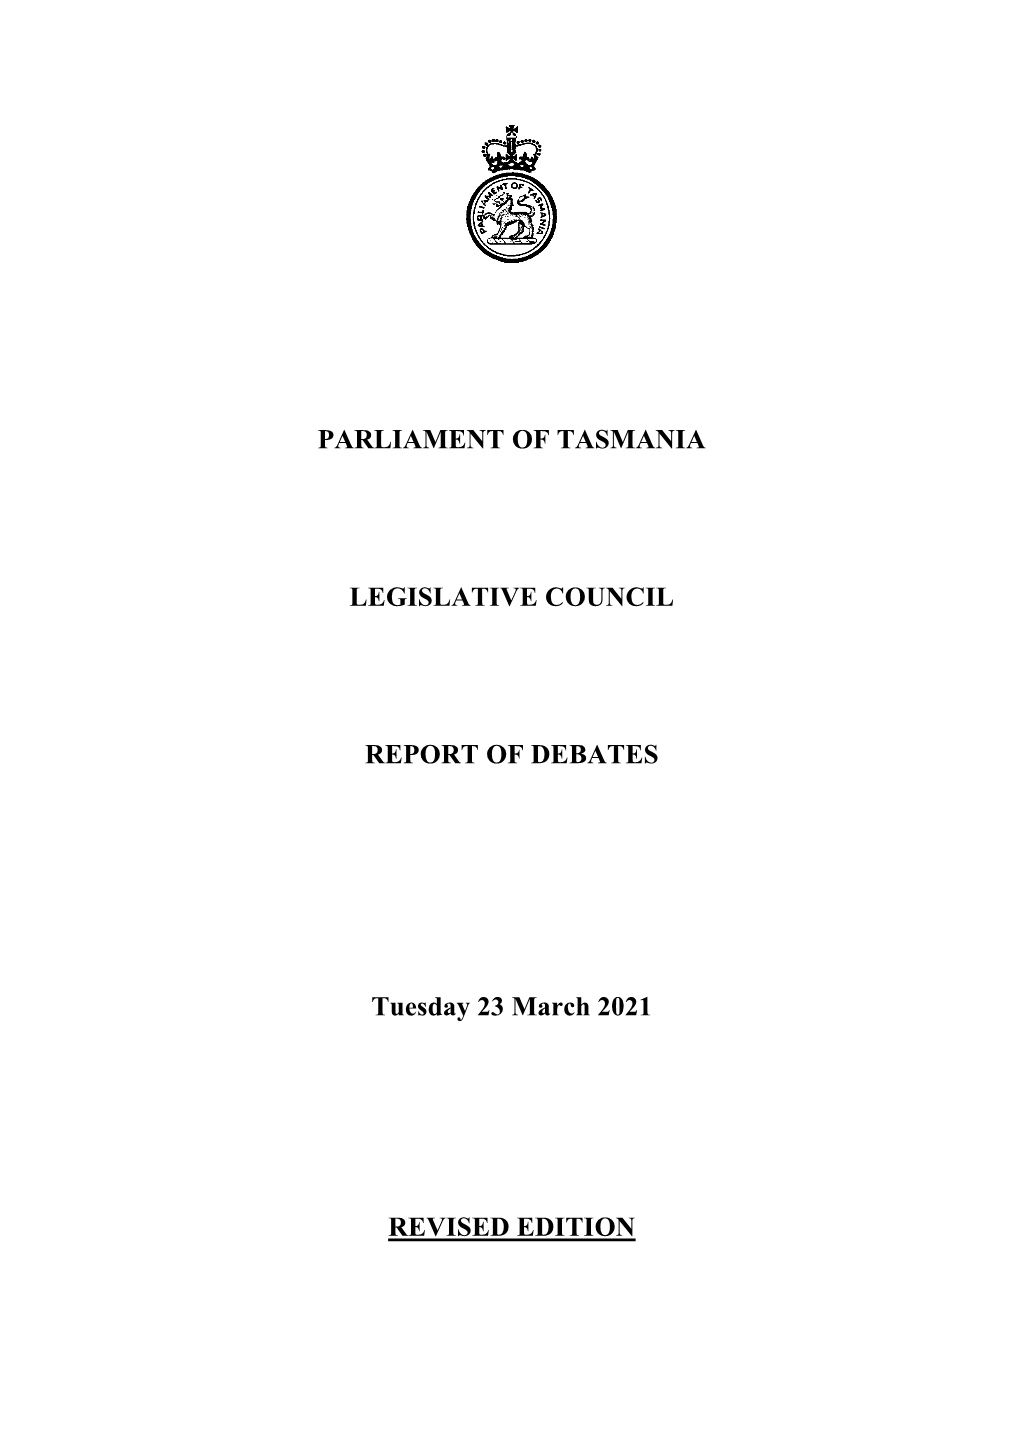 Legislative Council Tuesday 23 March 2021